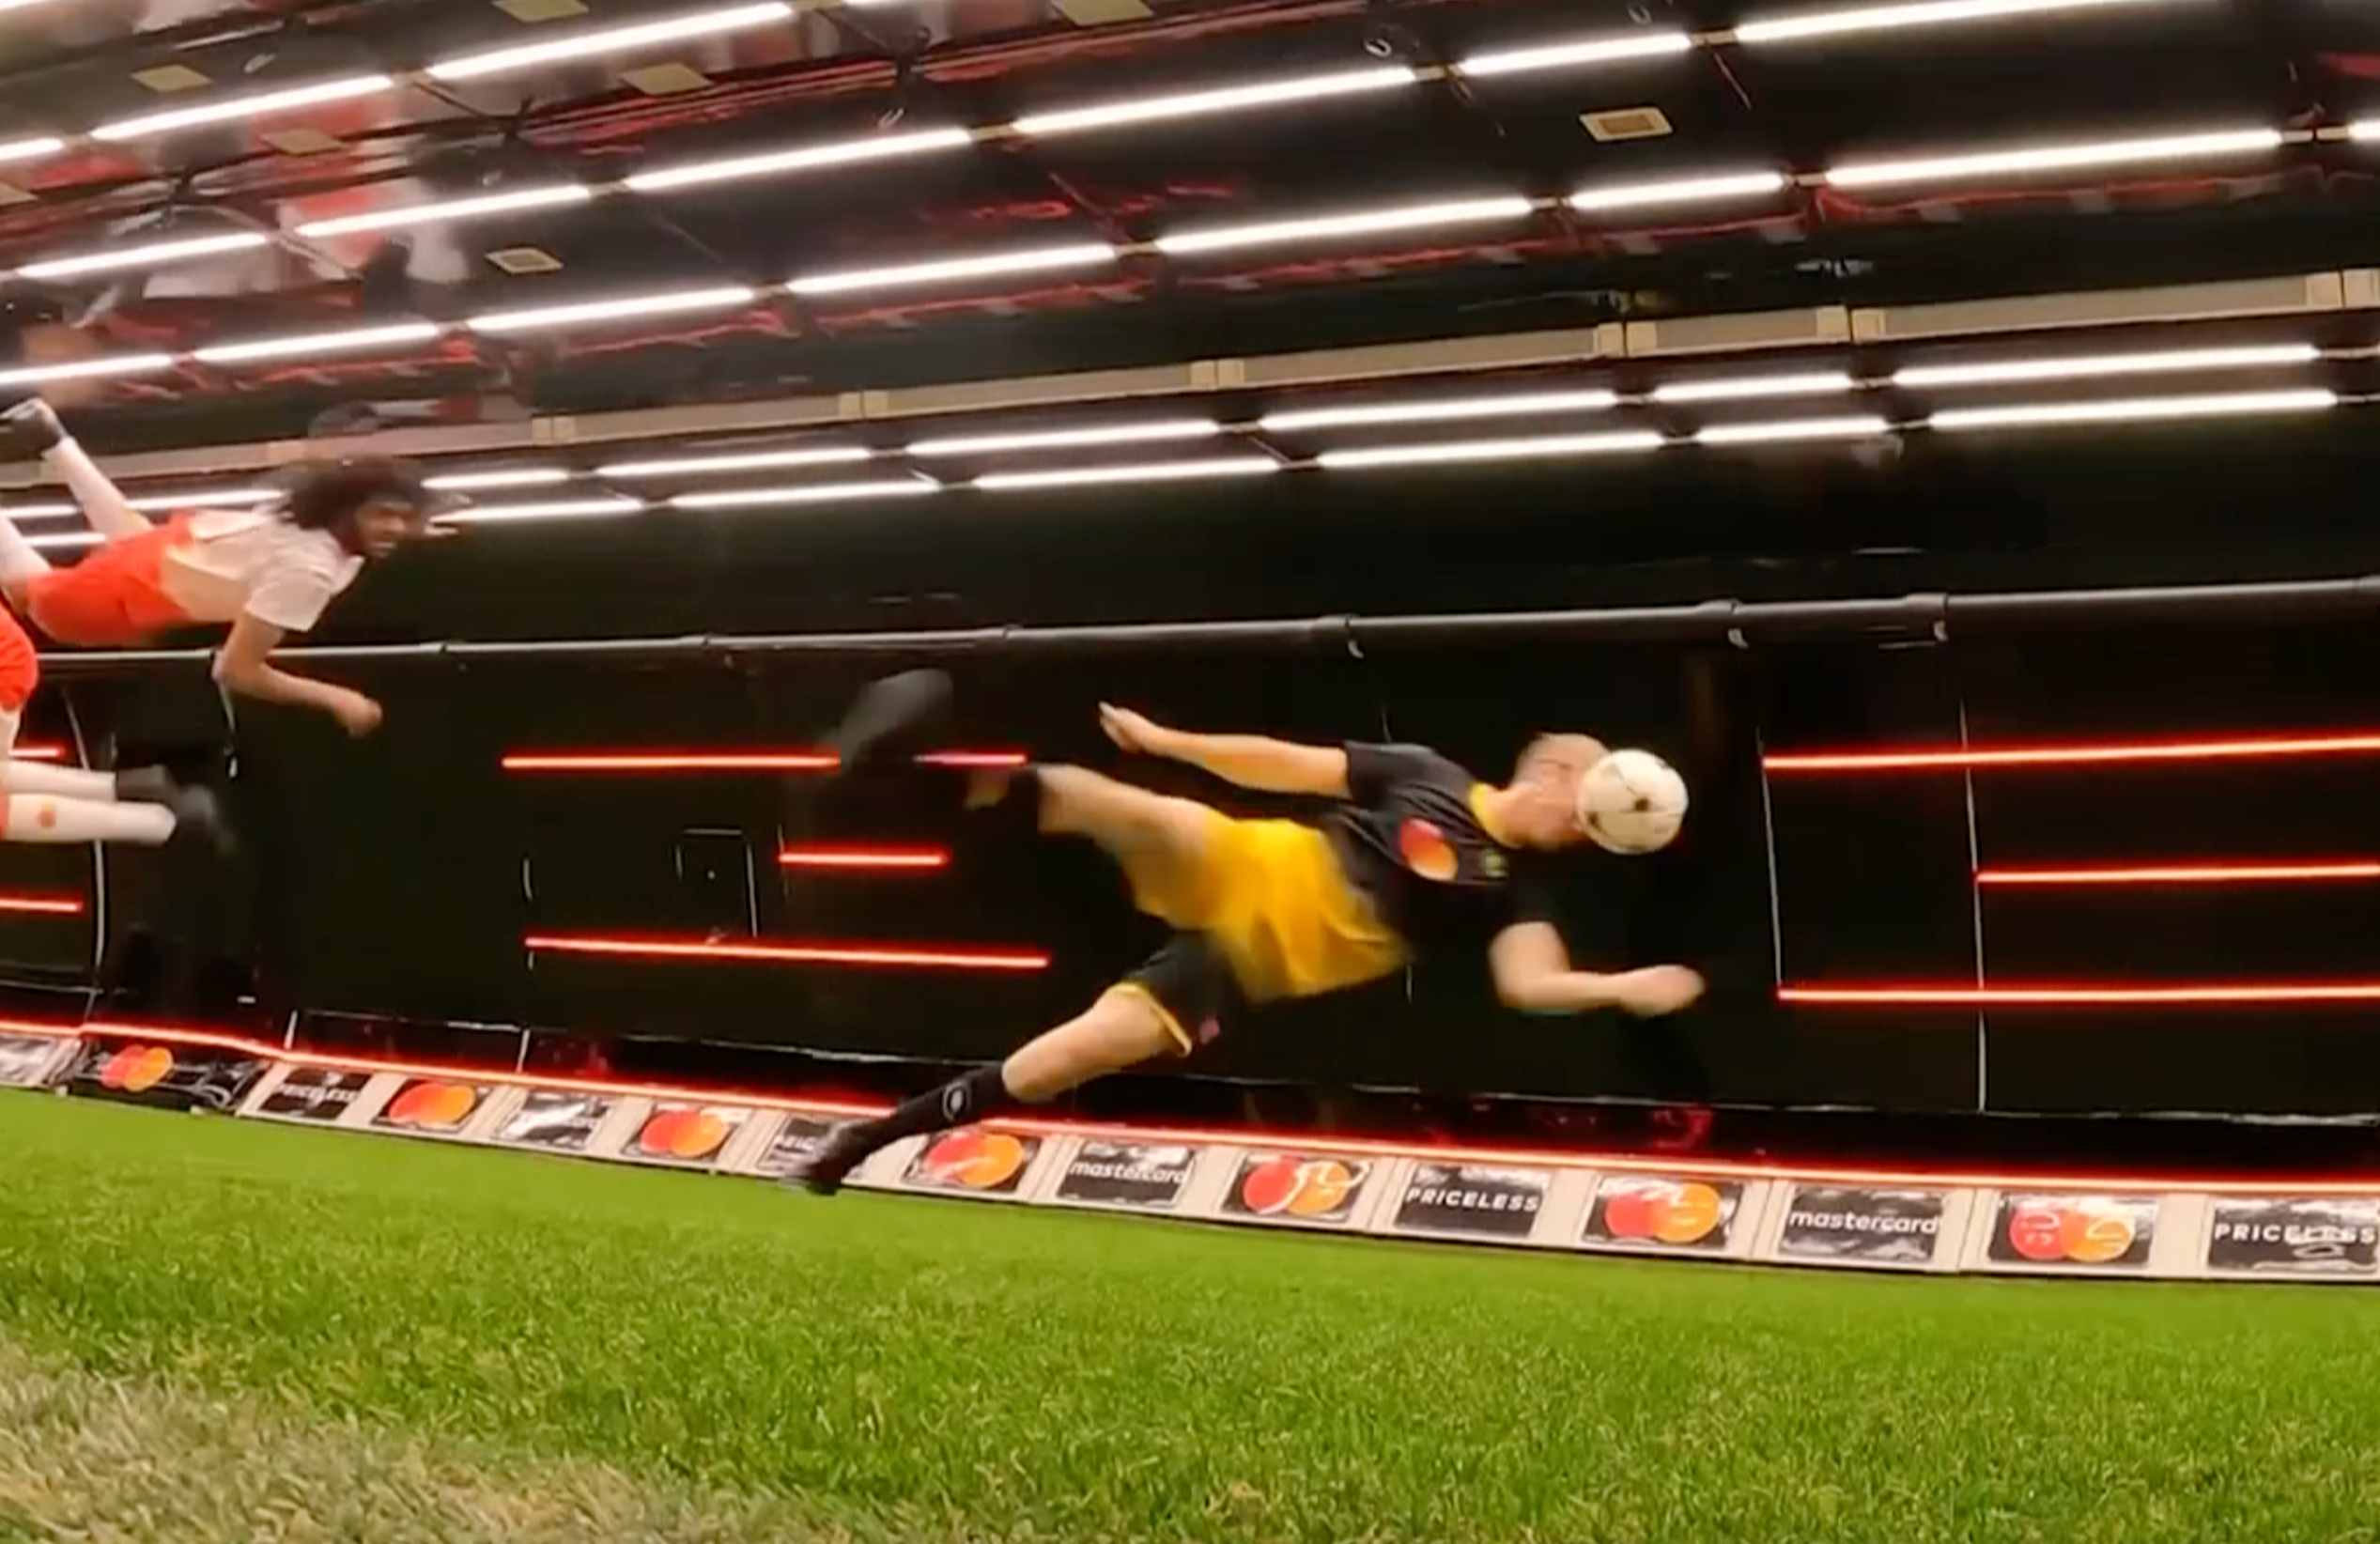 Soccer legend Luis Figo breaks world record playing zero gravity soccer on plane